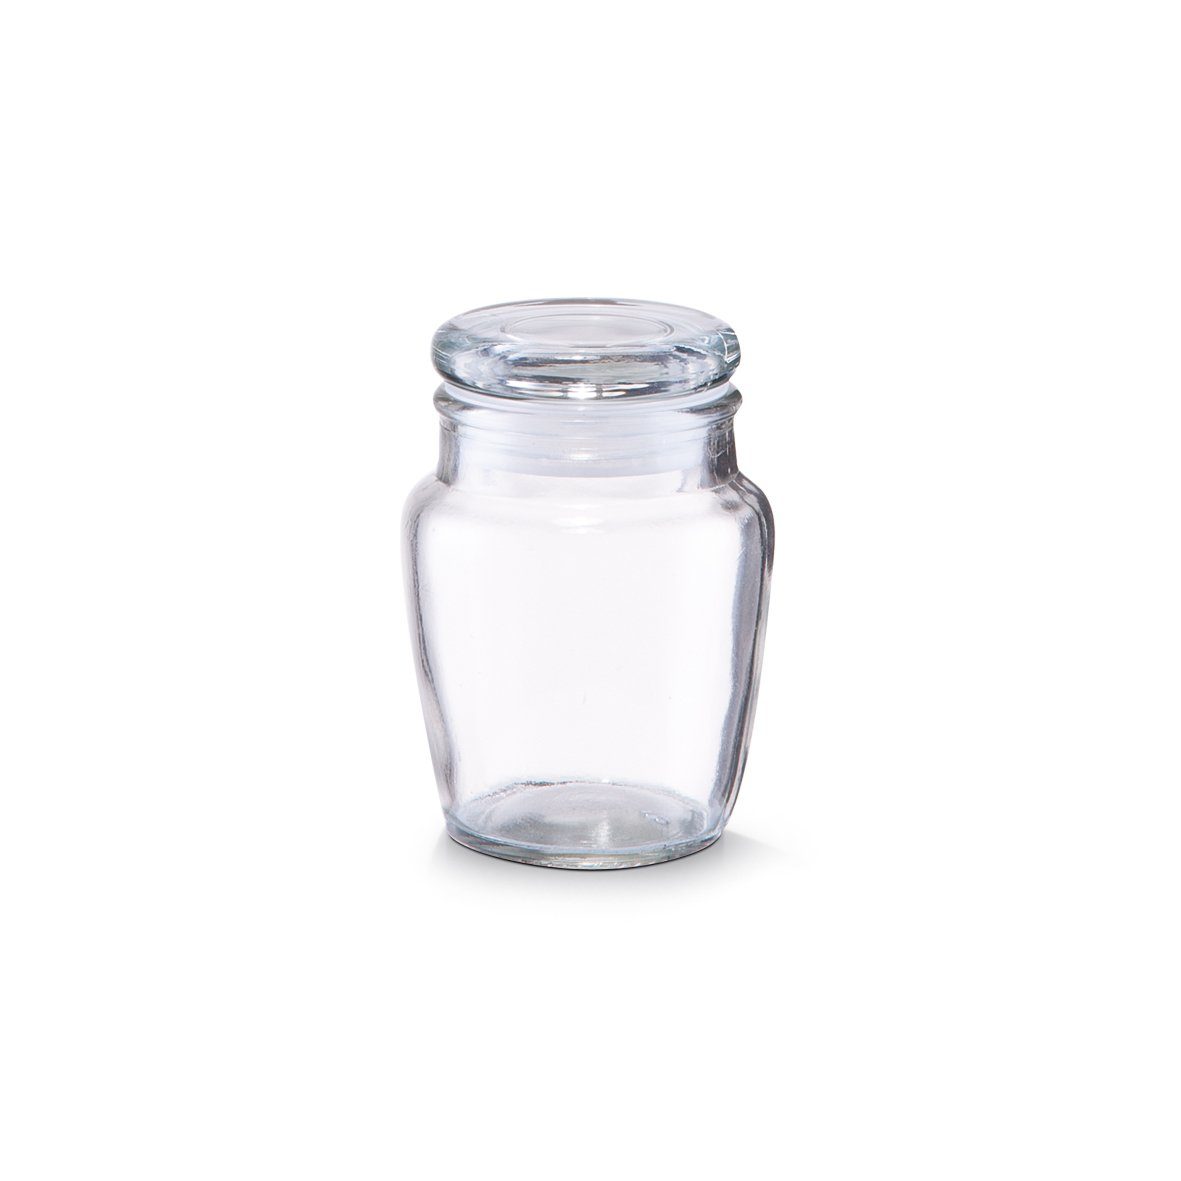 Zeller Present Gewürzbehälter Gewürzglas, Glas, Glas, 150 ml, Ø7 x 9,5 cm